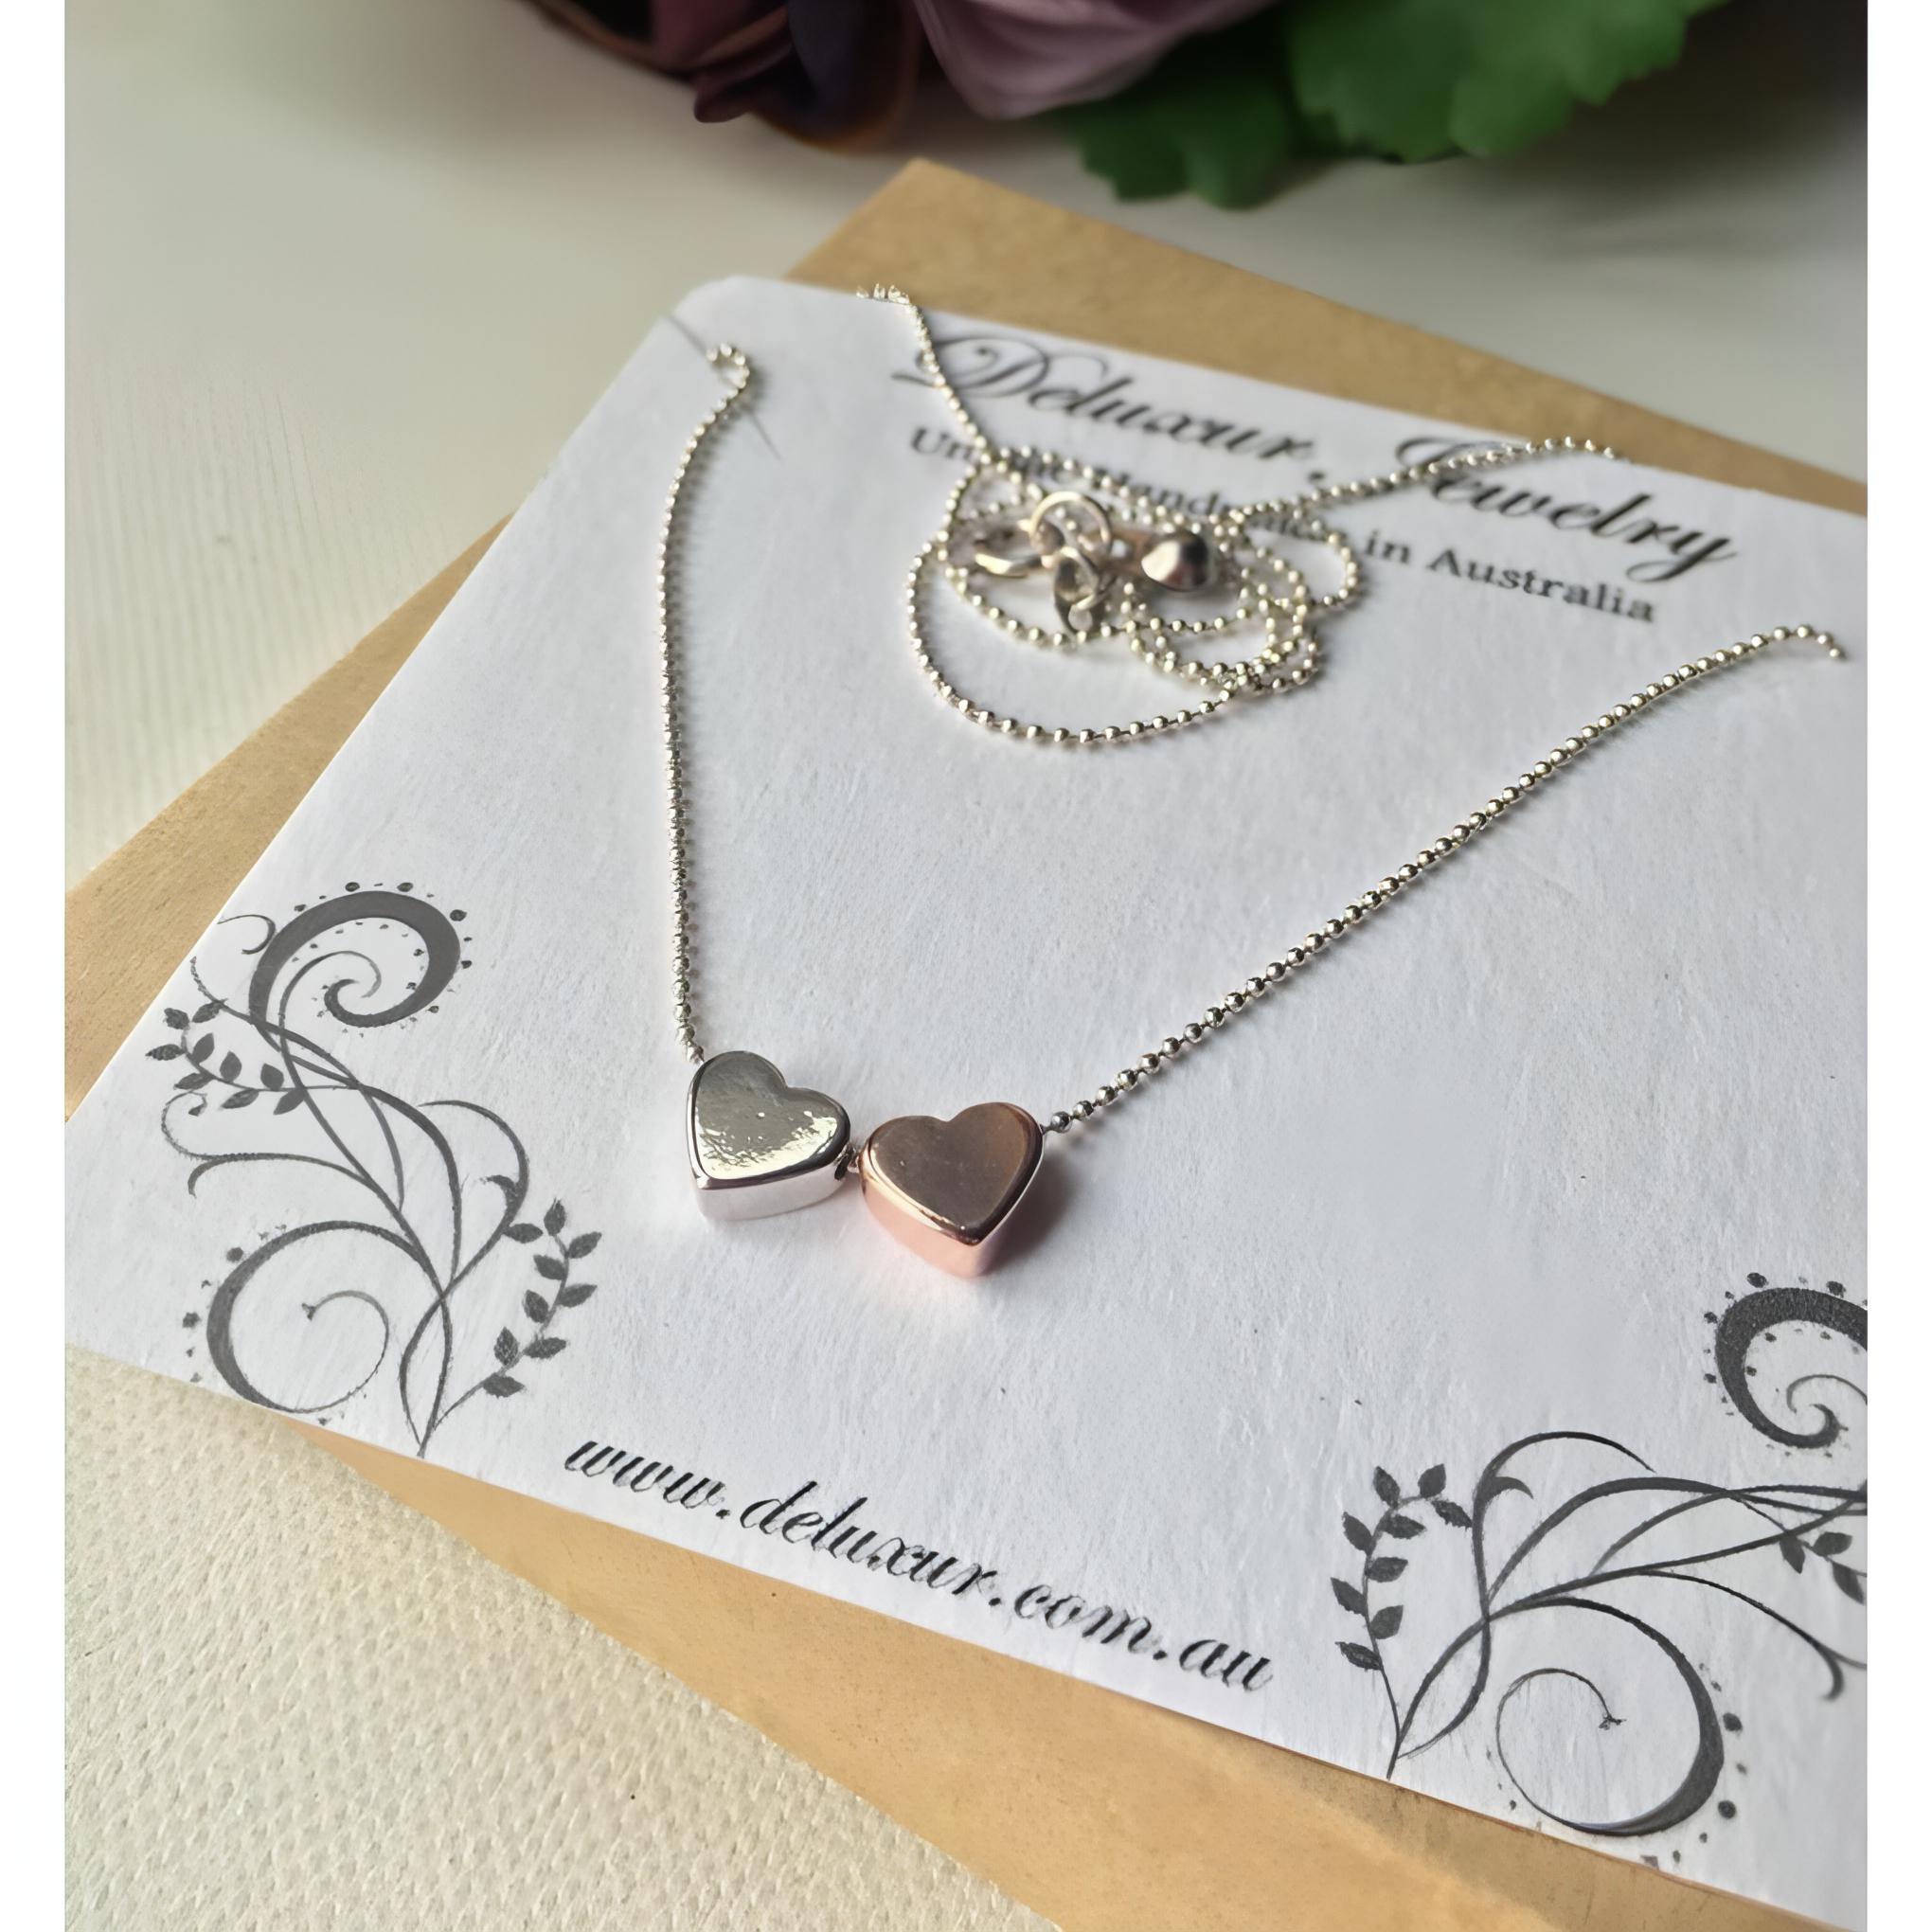 THOMAS SABO Necklace with hearts and white stones rose gold | TKE2154R |  Ice Jewellery Australia